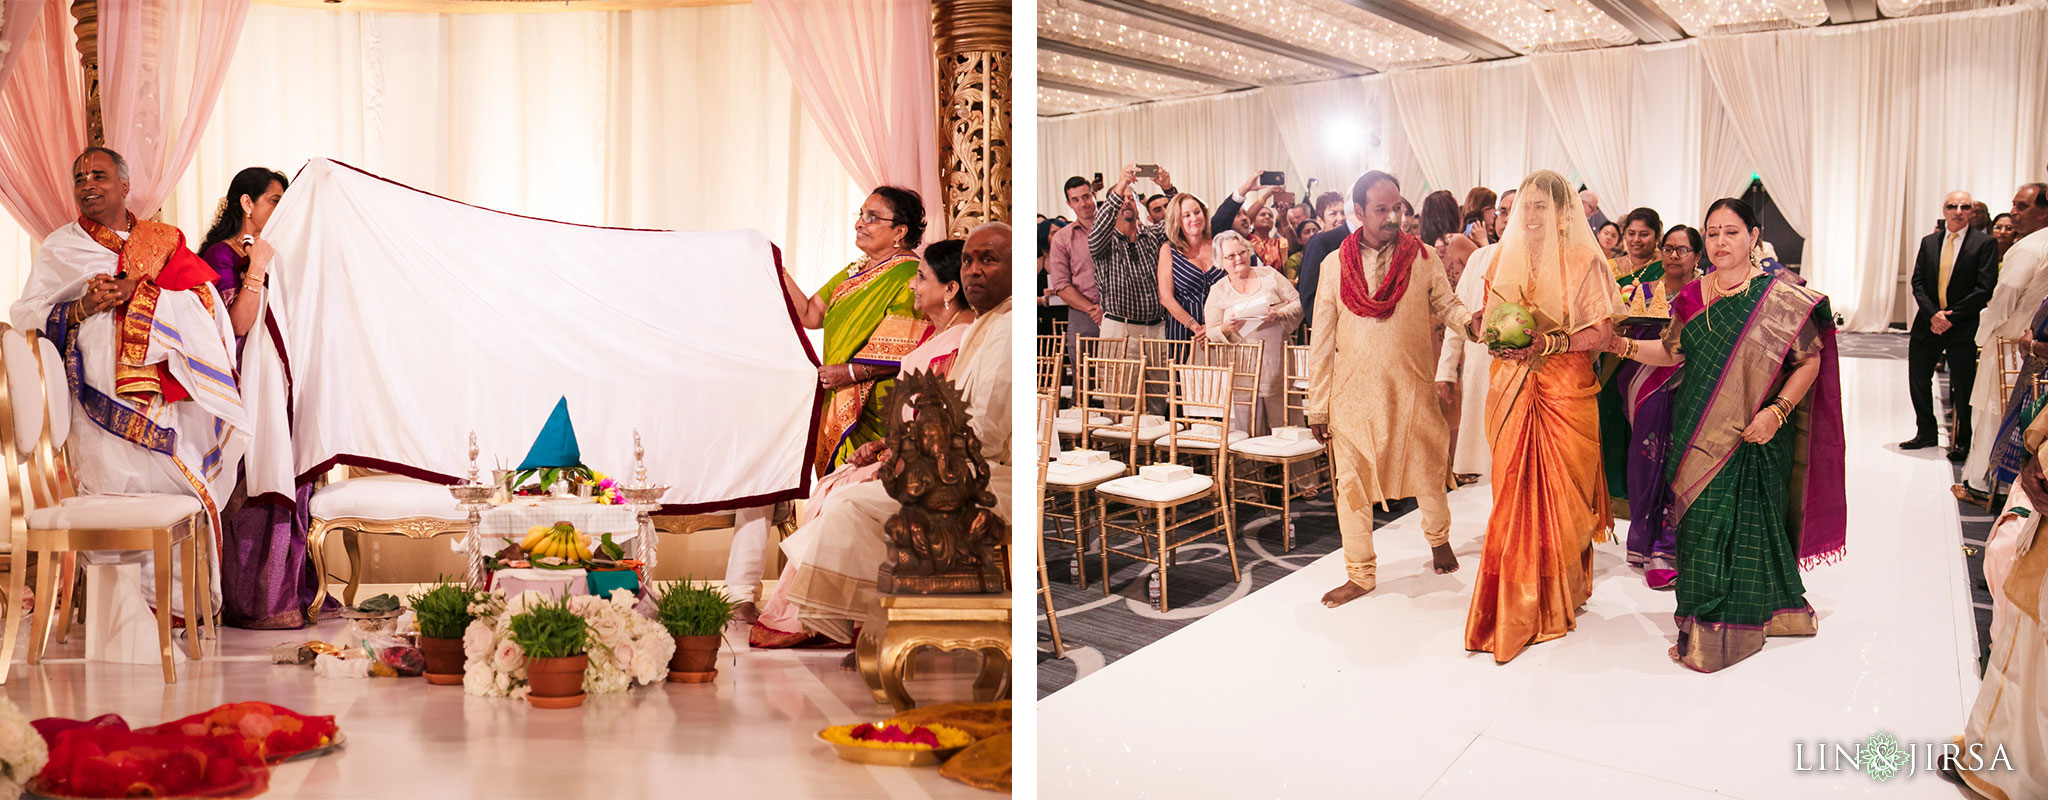 15 long beach hyatt south indian wedding photography